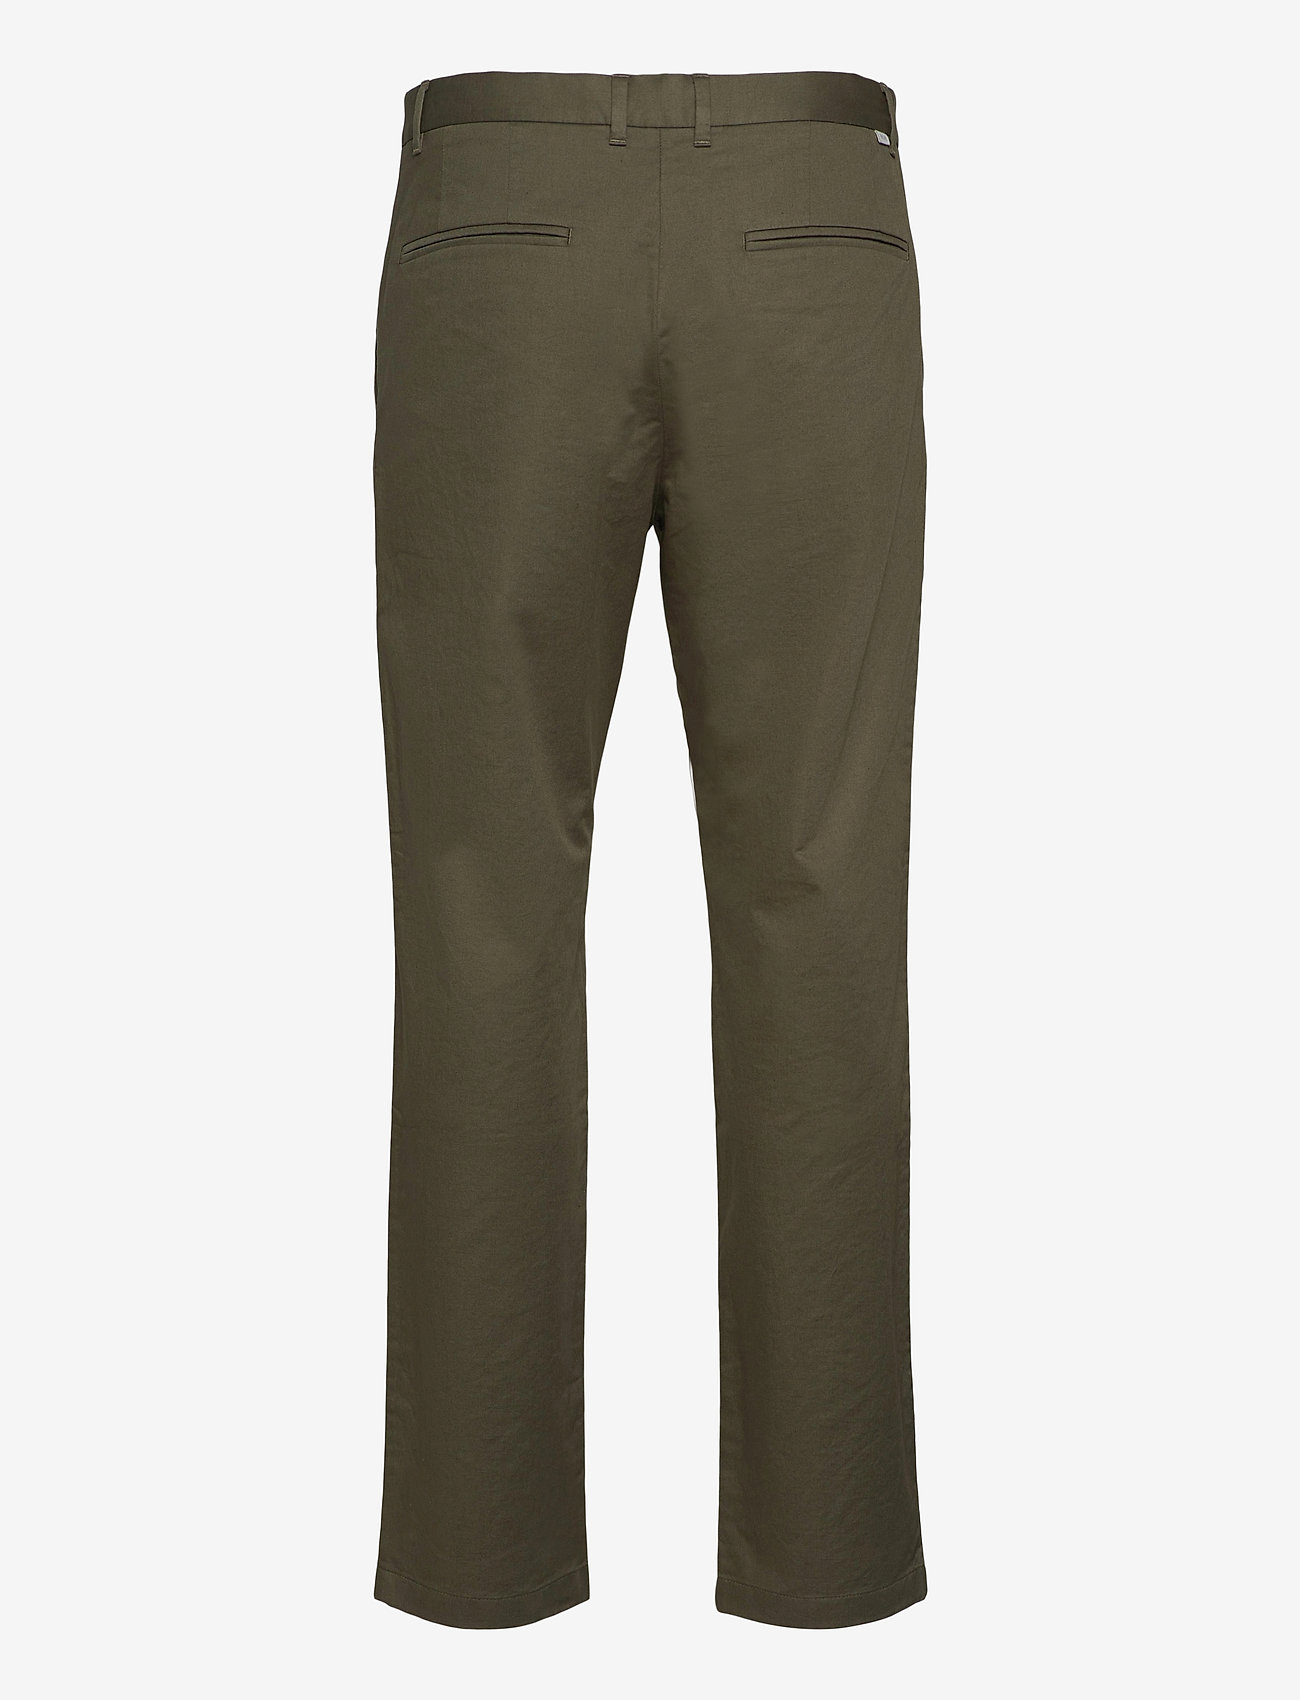 Wood Wood - Marcus light twill trousers - „chino“ stiliaus kelnės - olive - 1